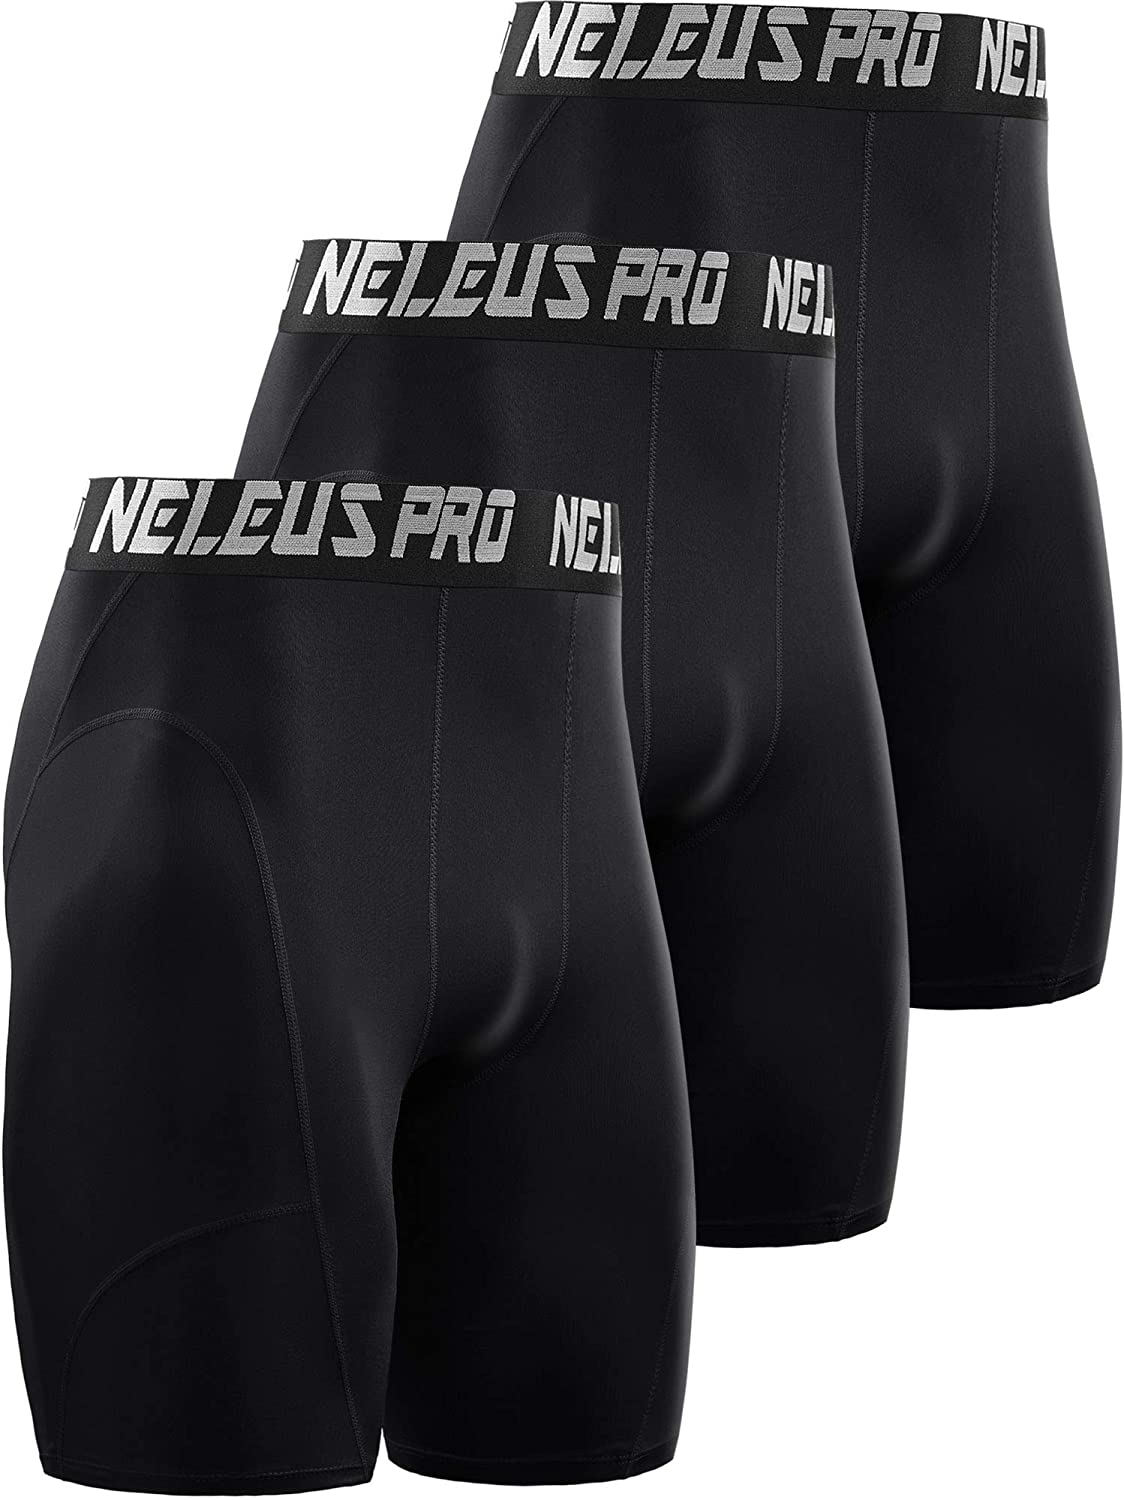 Neleus Men's 3 Pack Compression Short with Pocket 